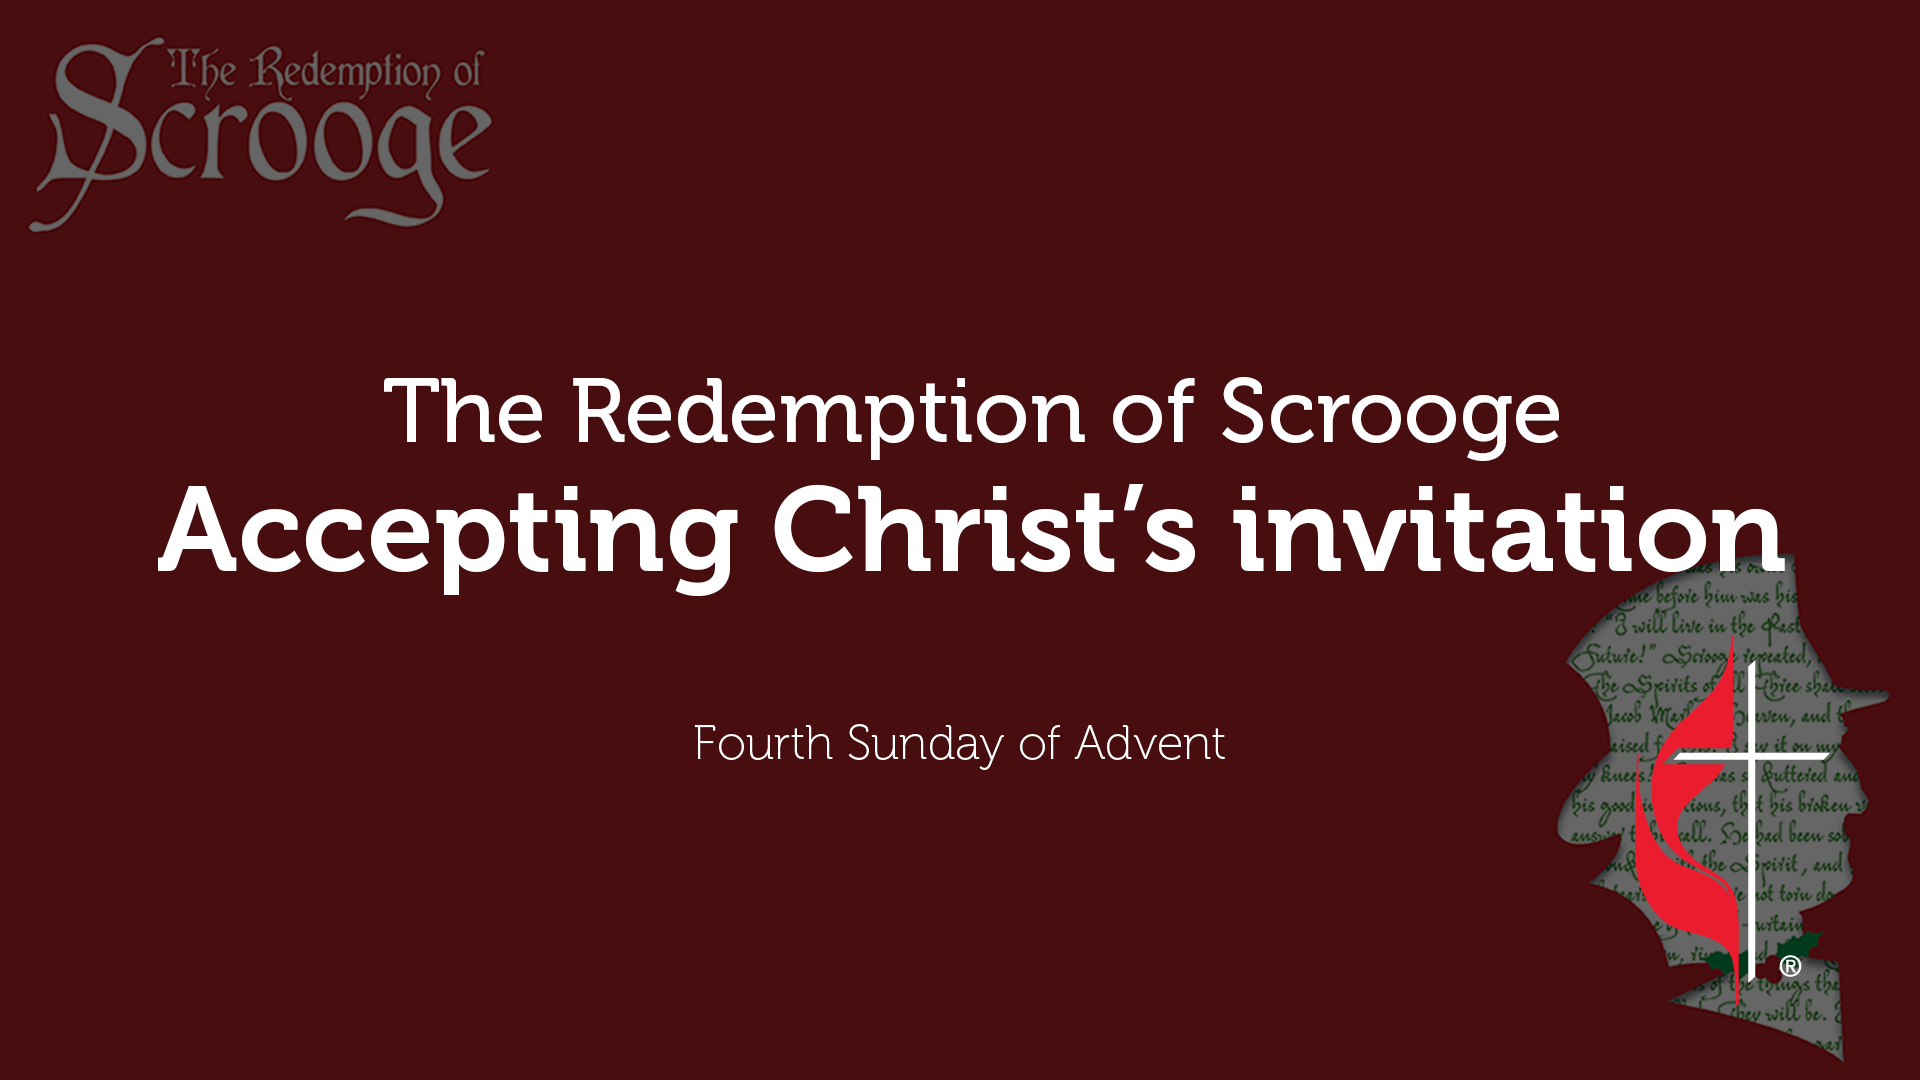 Accepting Christ’s invitation